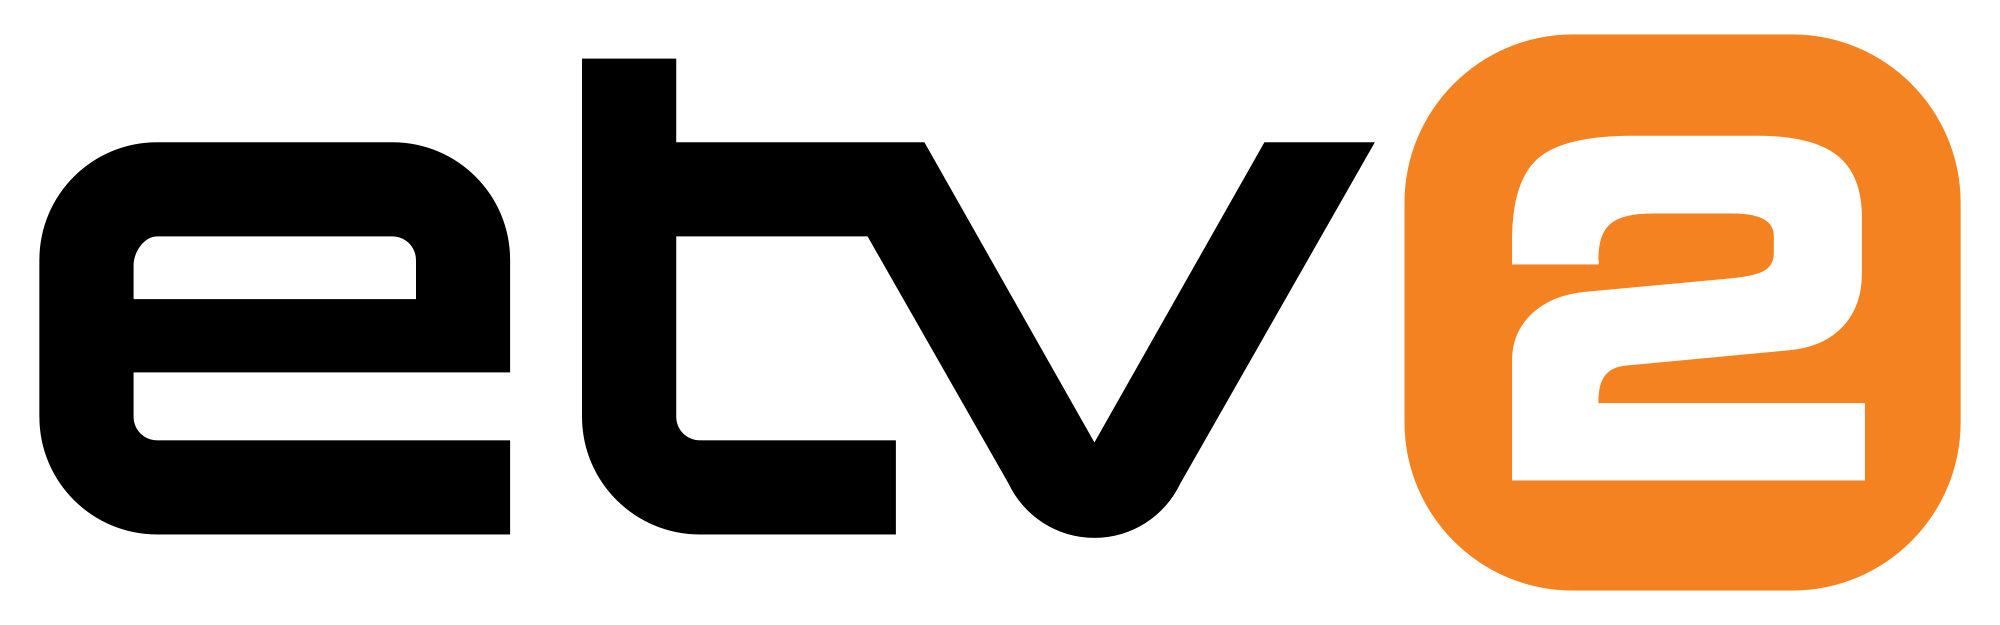 ETV Logo - ETV 2 | Logopedia | FANDOM powered by Wikia